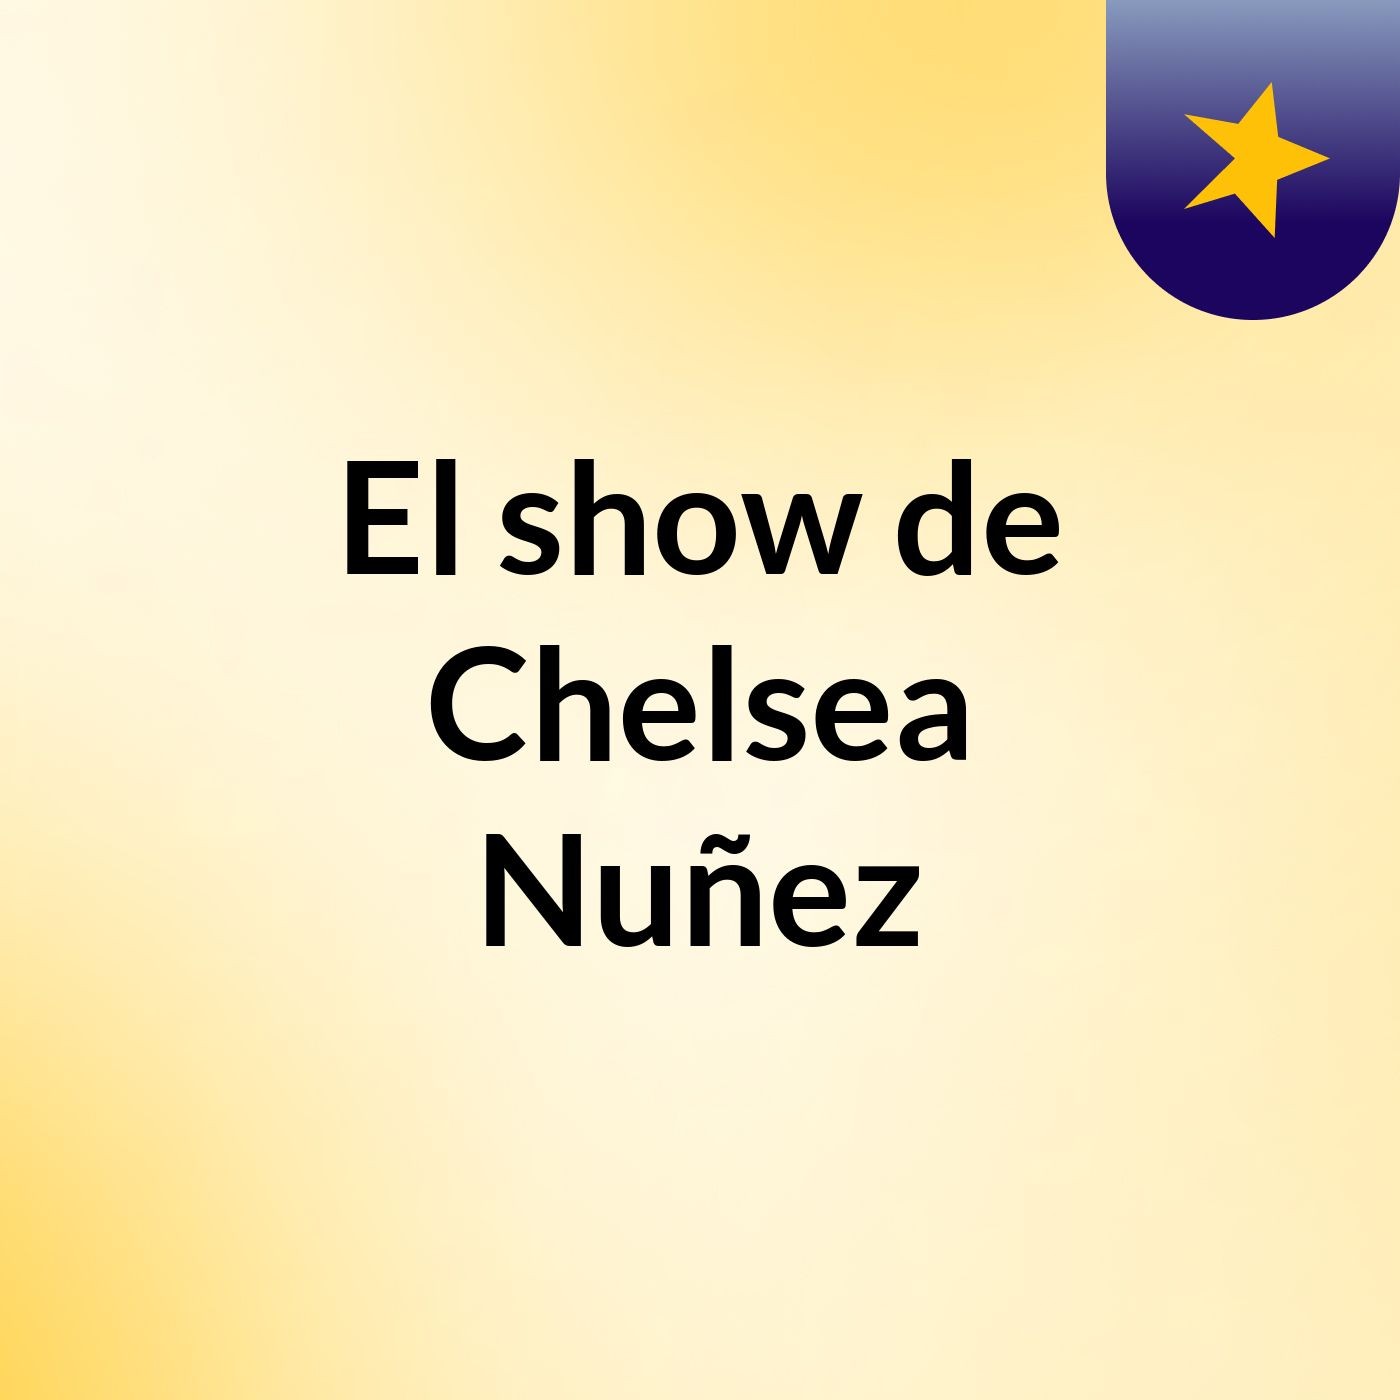 El show de Chelsea Nuñez